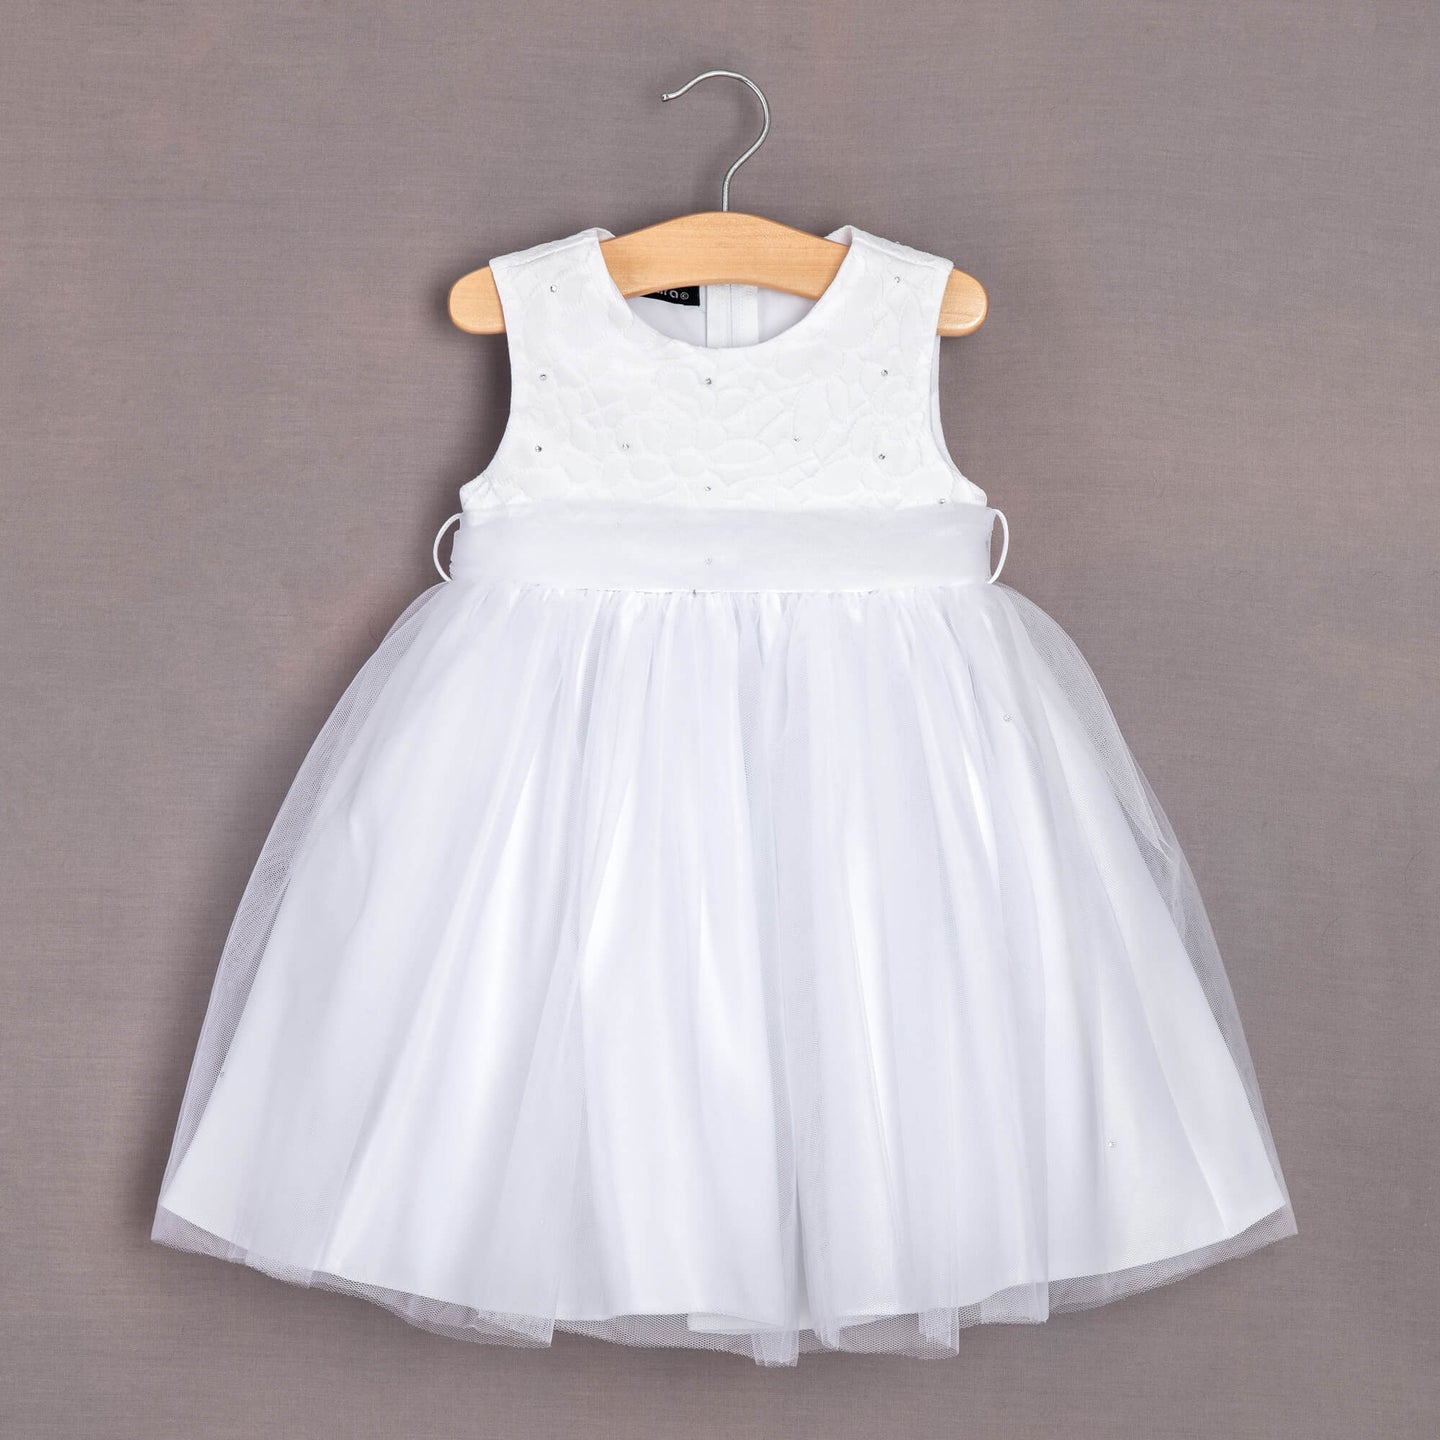 Pretty white baby dress